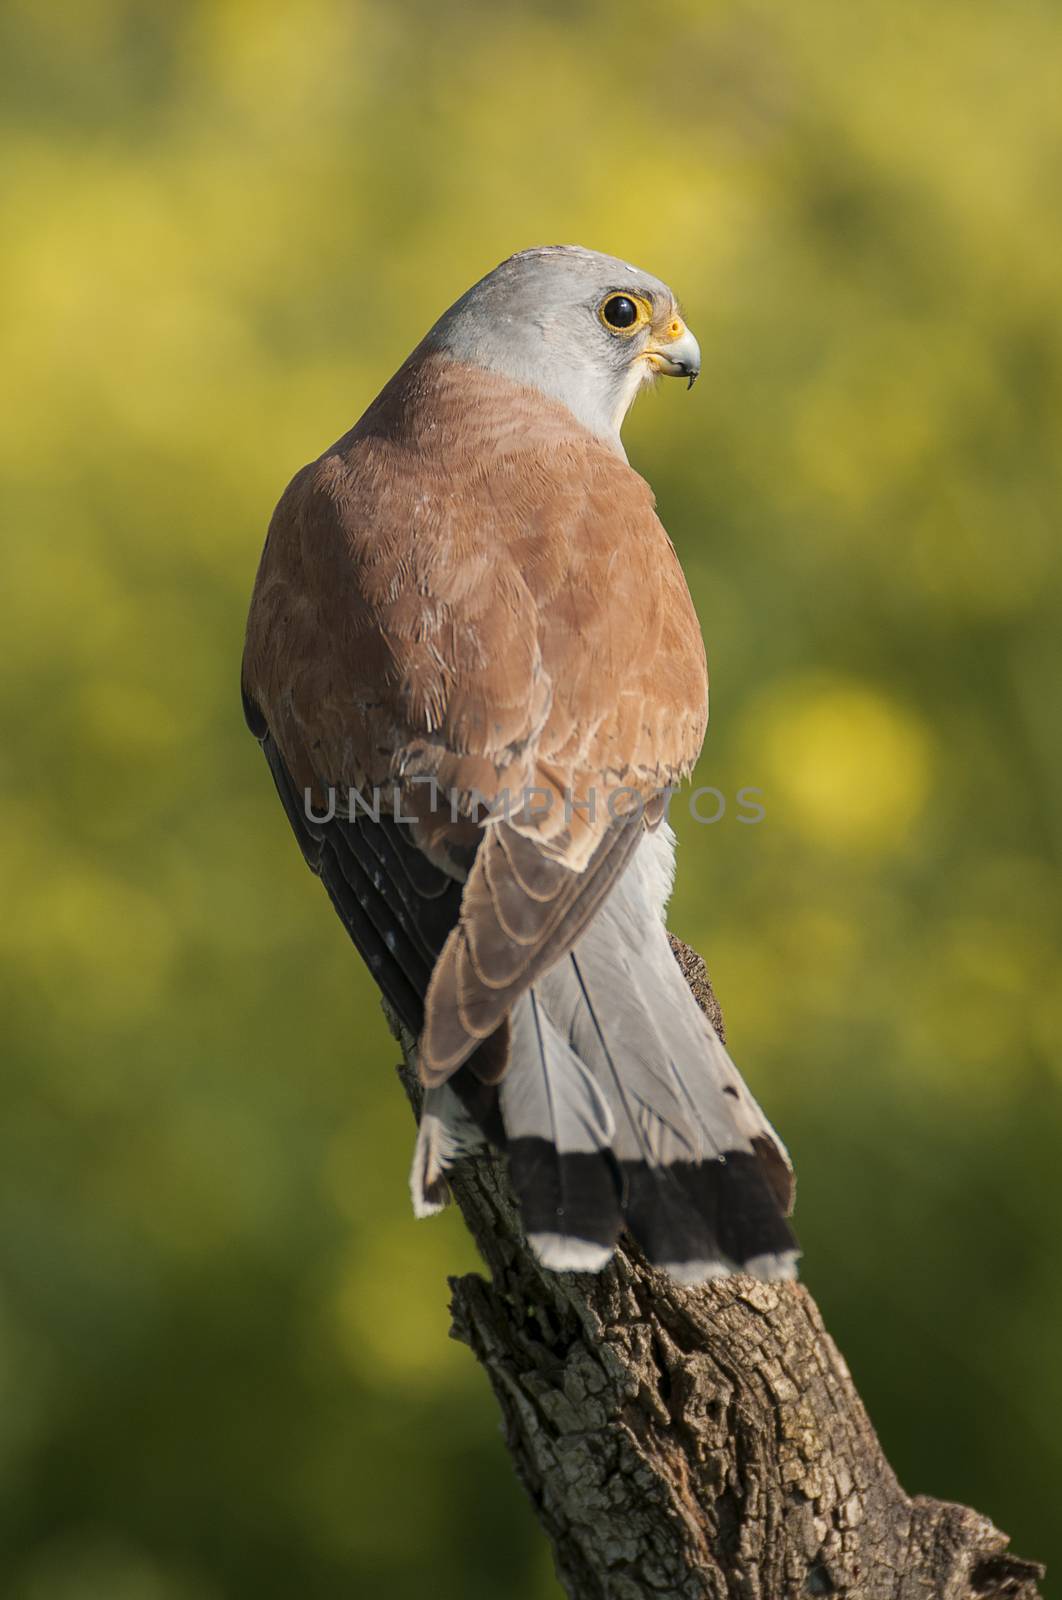 Lesser kestrel, male, Falco naumanni by jalonsohu@gmail.com